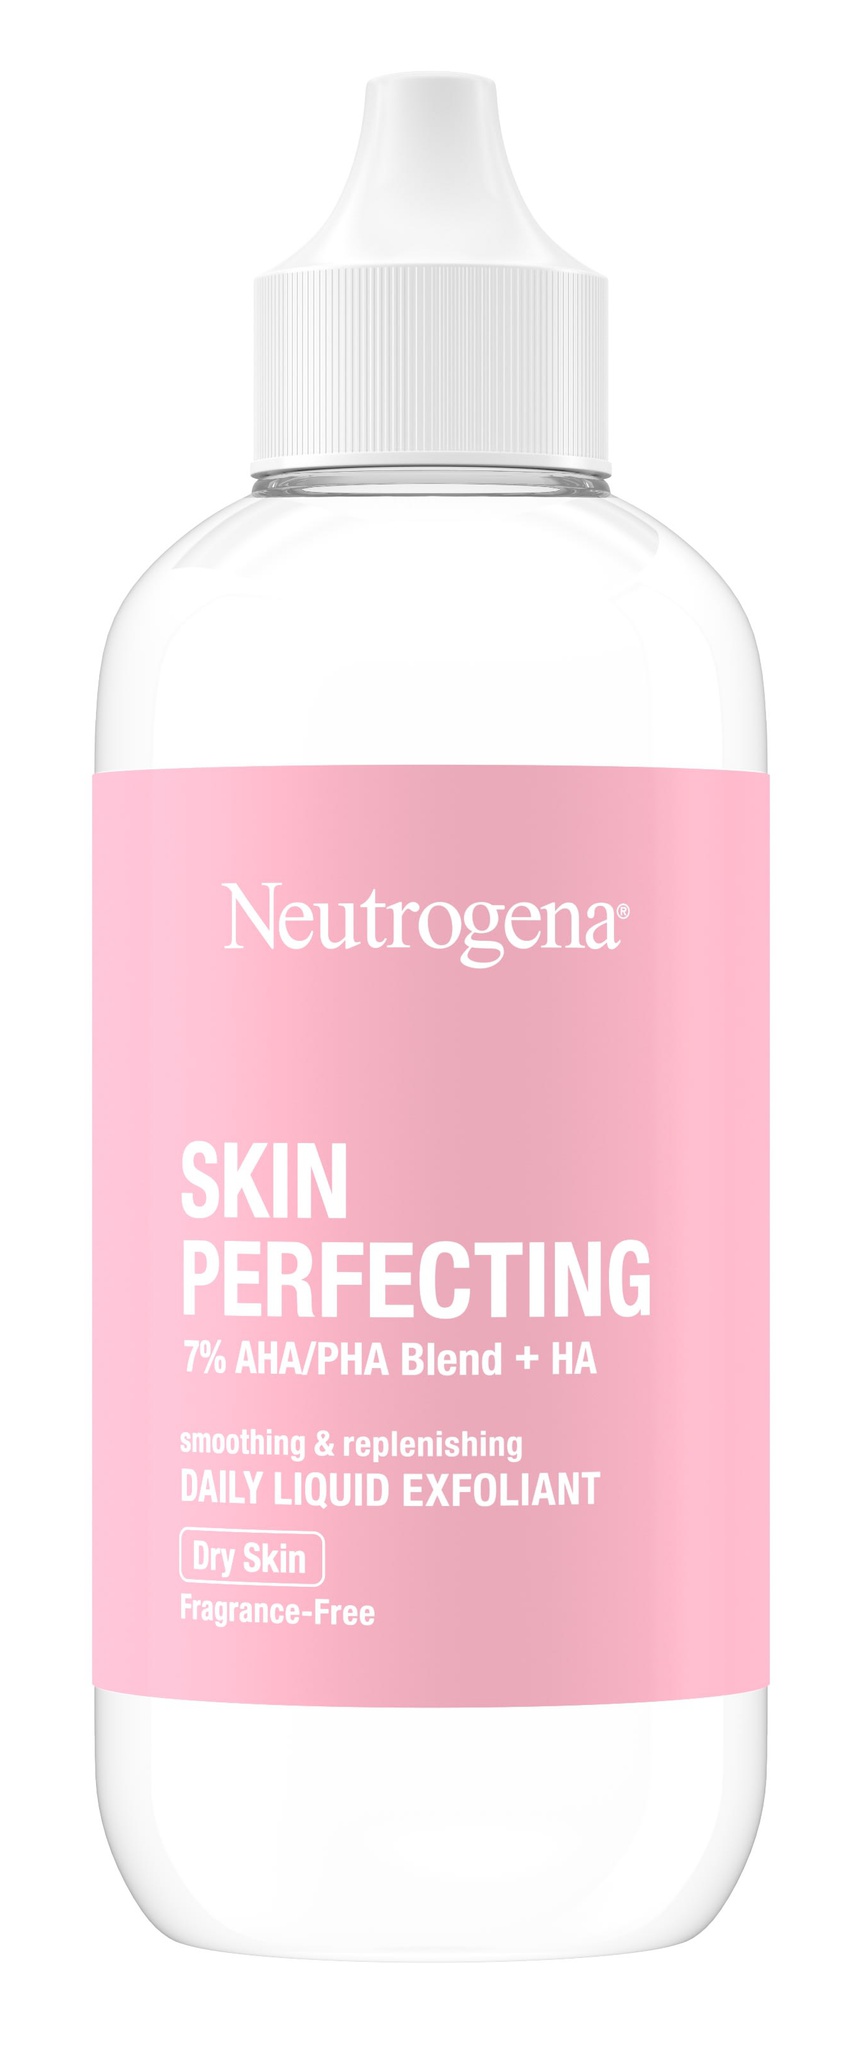 Neutrogena Skin Perfecting Dry Skin Liquid Facial Exfoliant